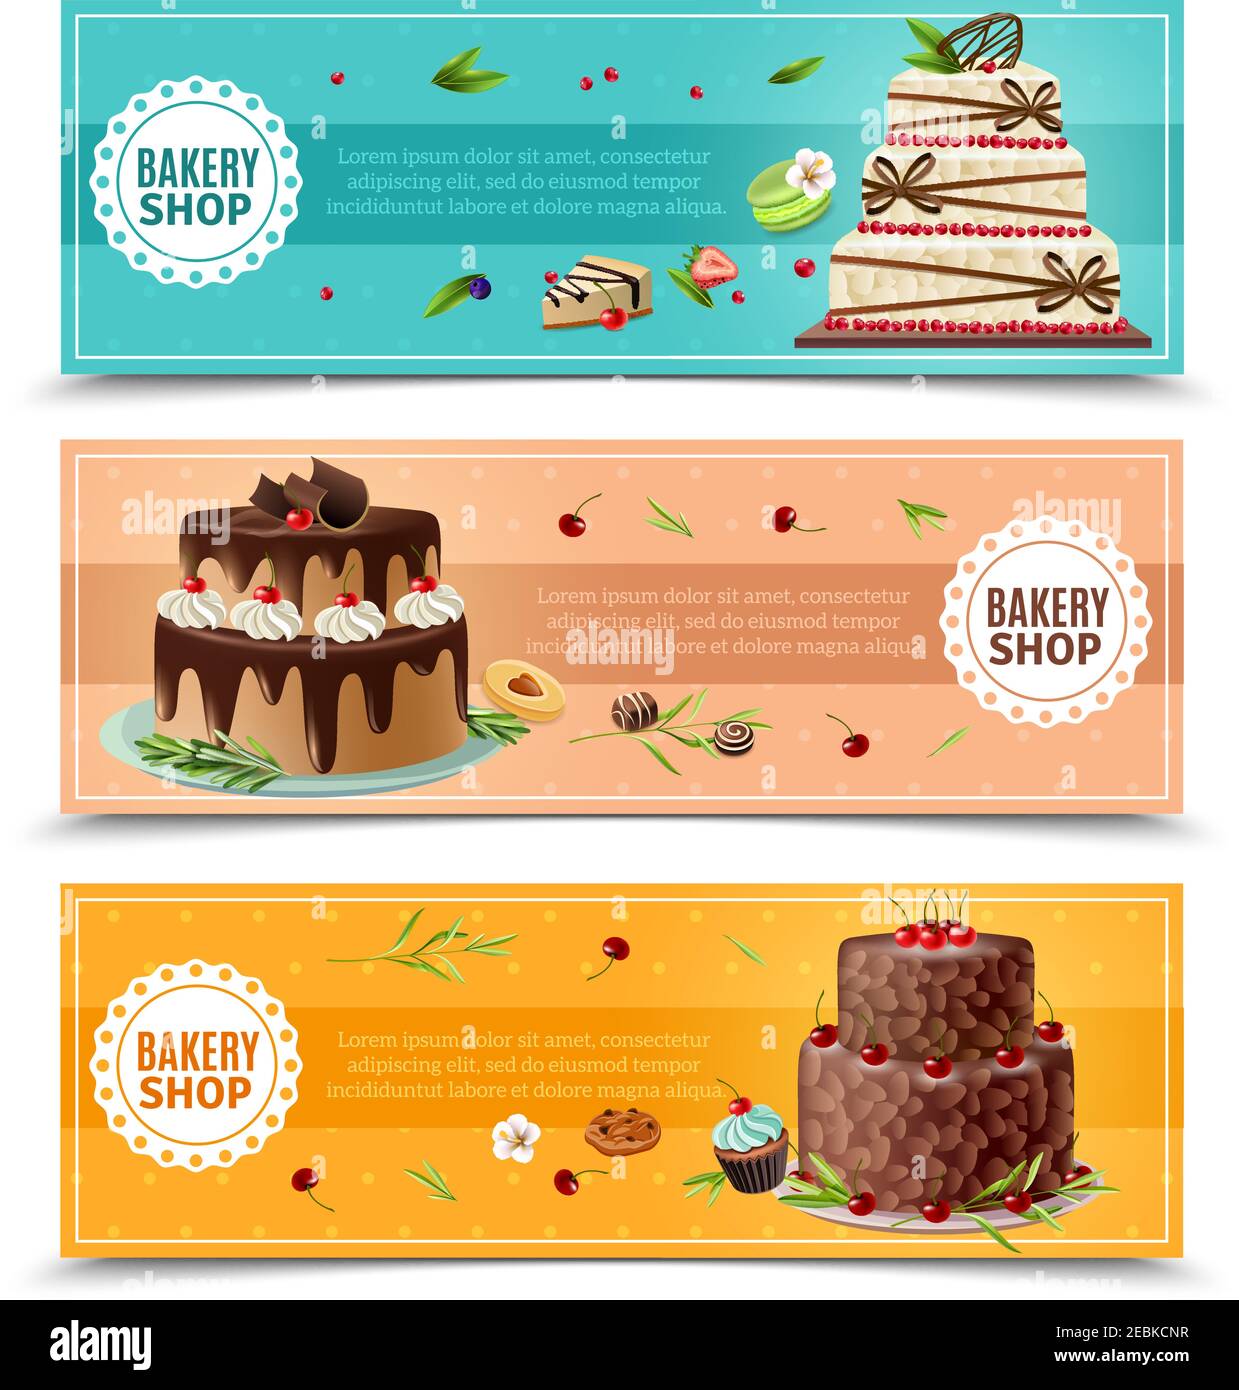 How to Bakers & Sweets Shop Banner Flex Design in Coreldraw Tutorial